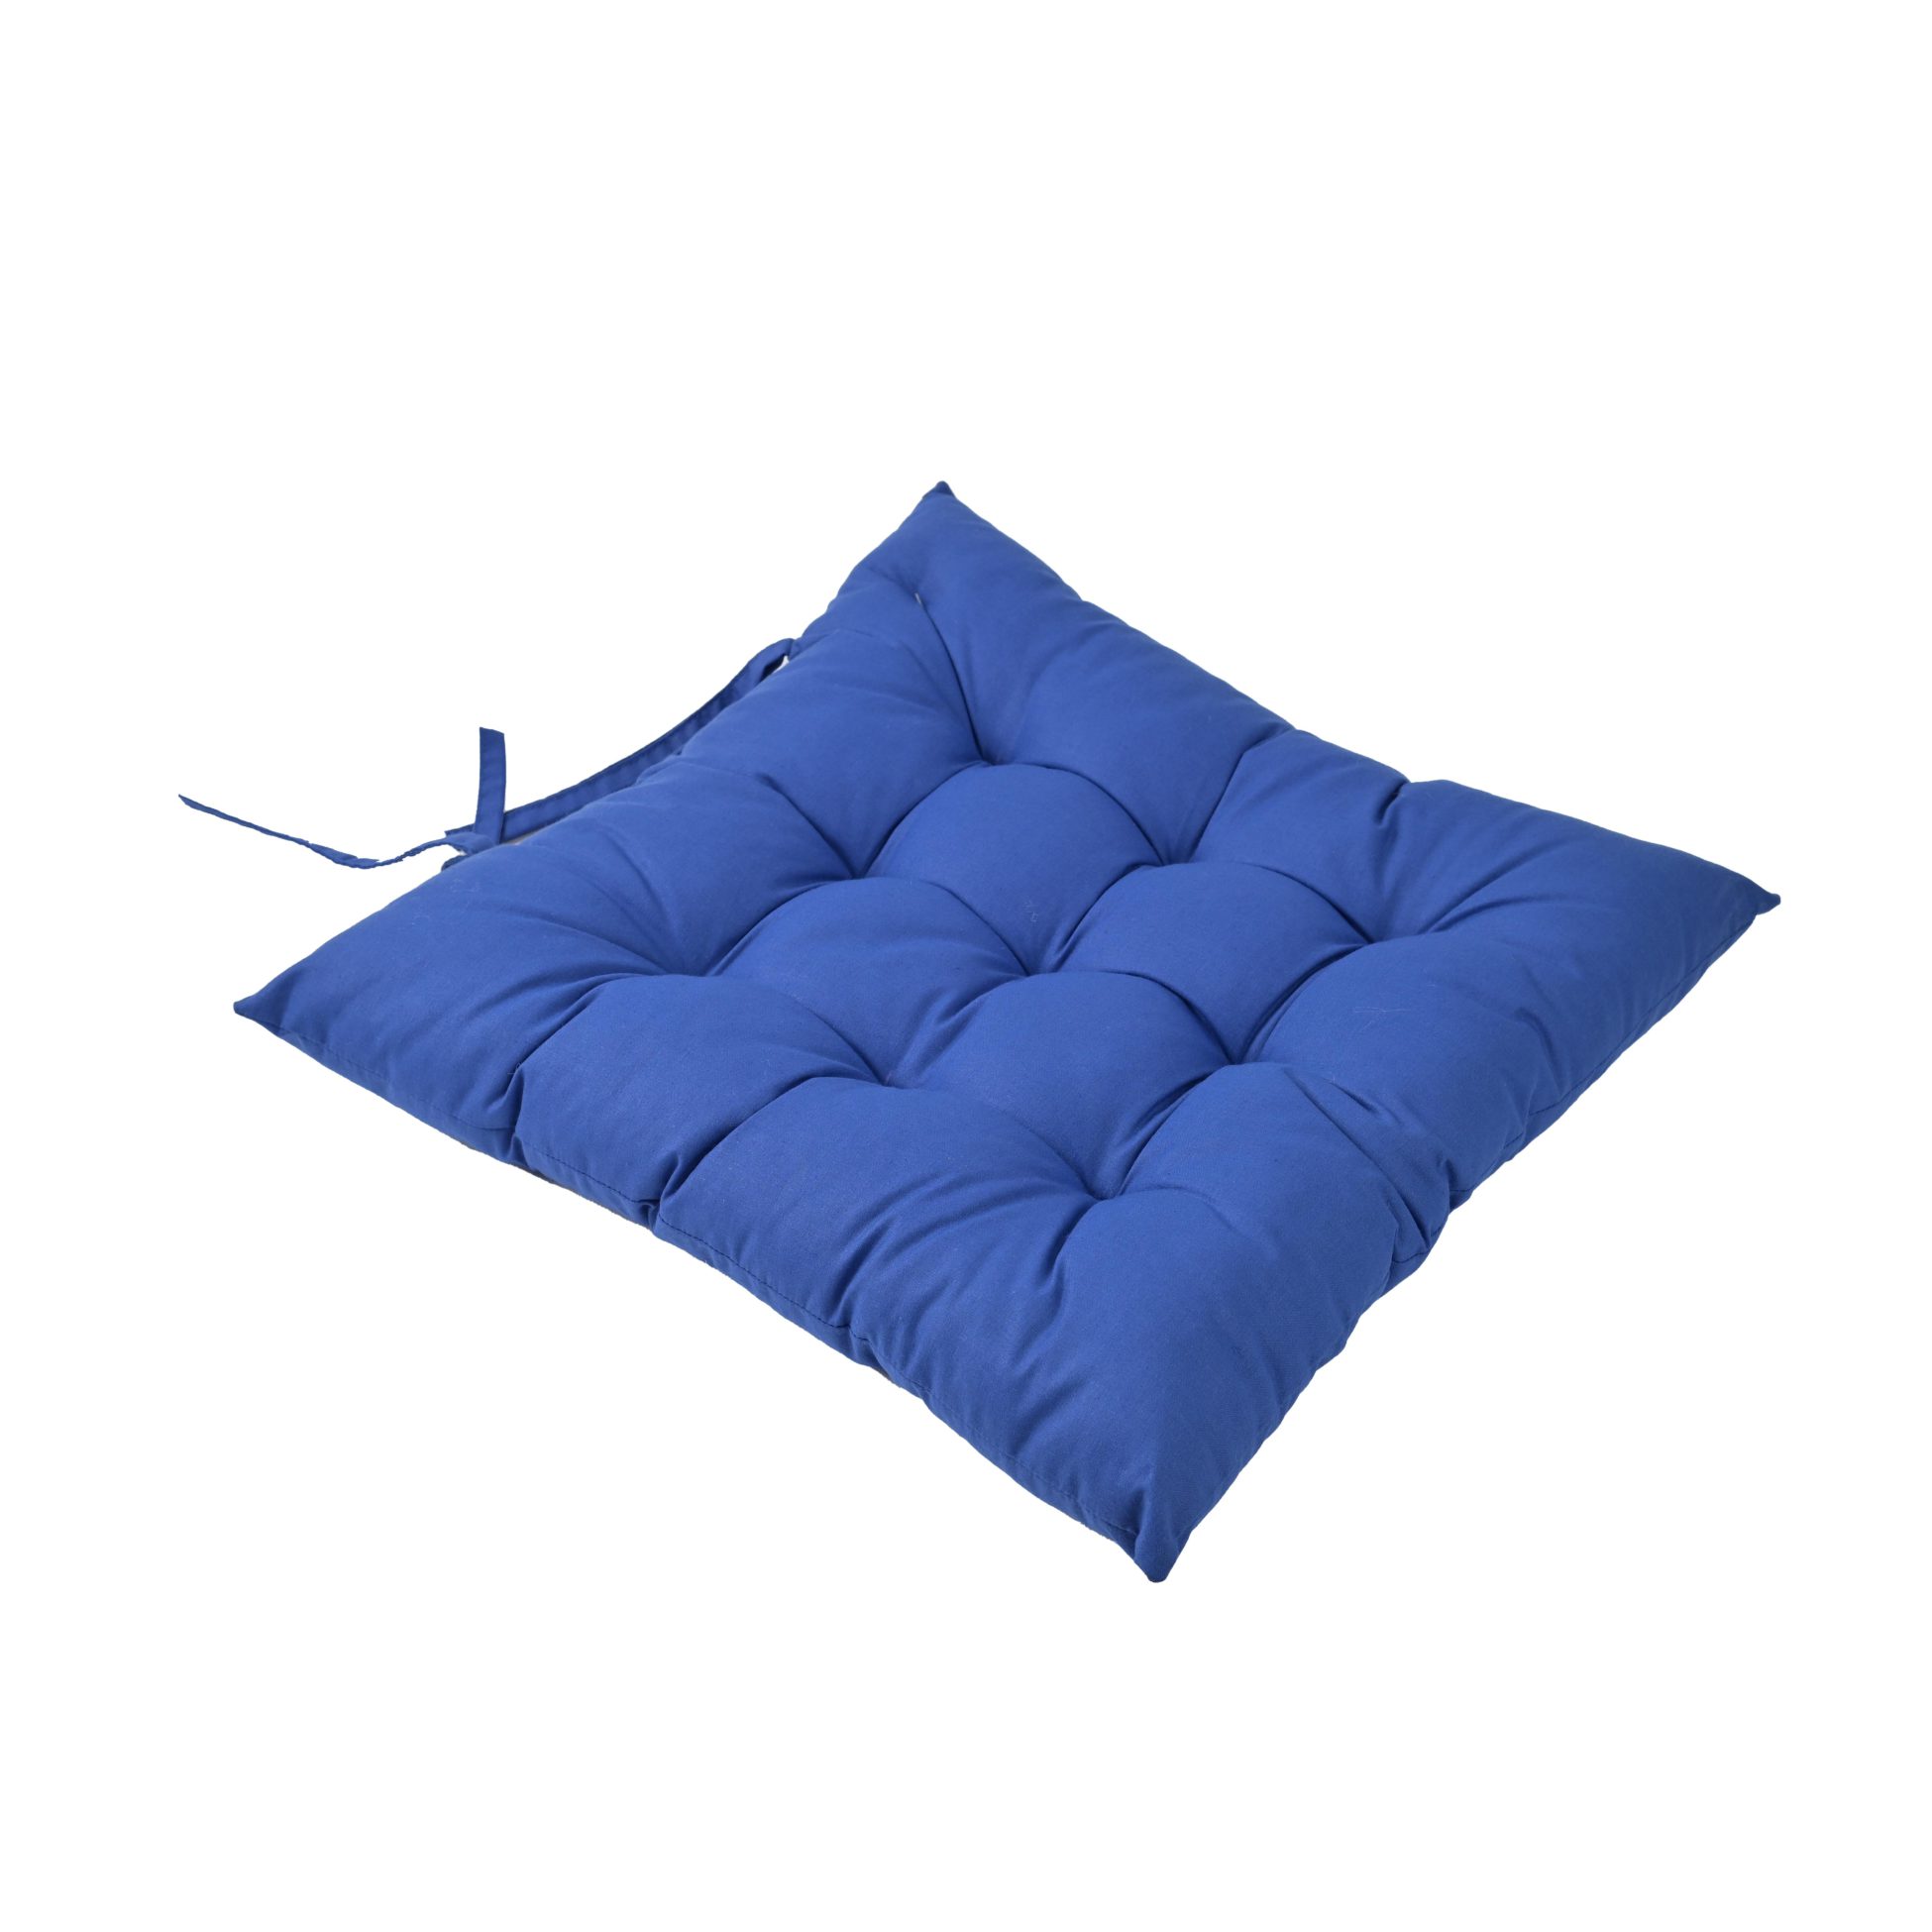 Buy Seat Cushion Online In Lebanon - SKU:5281122024869